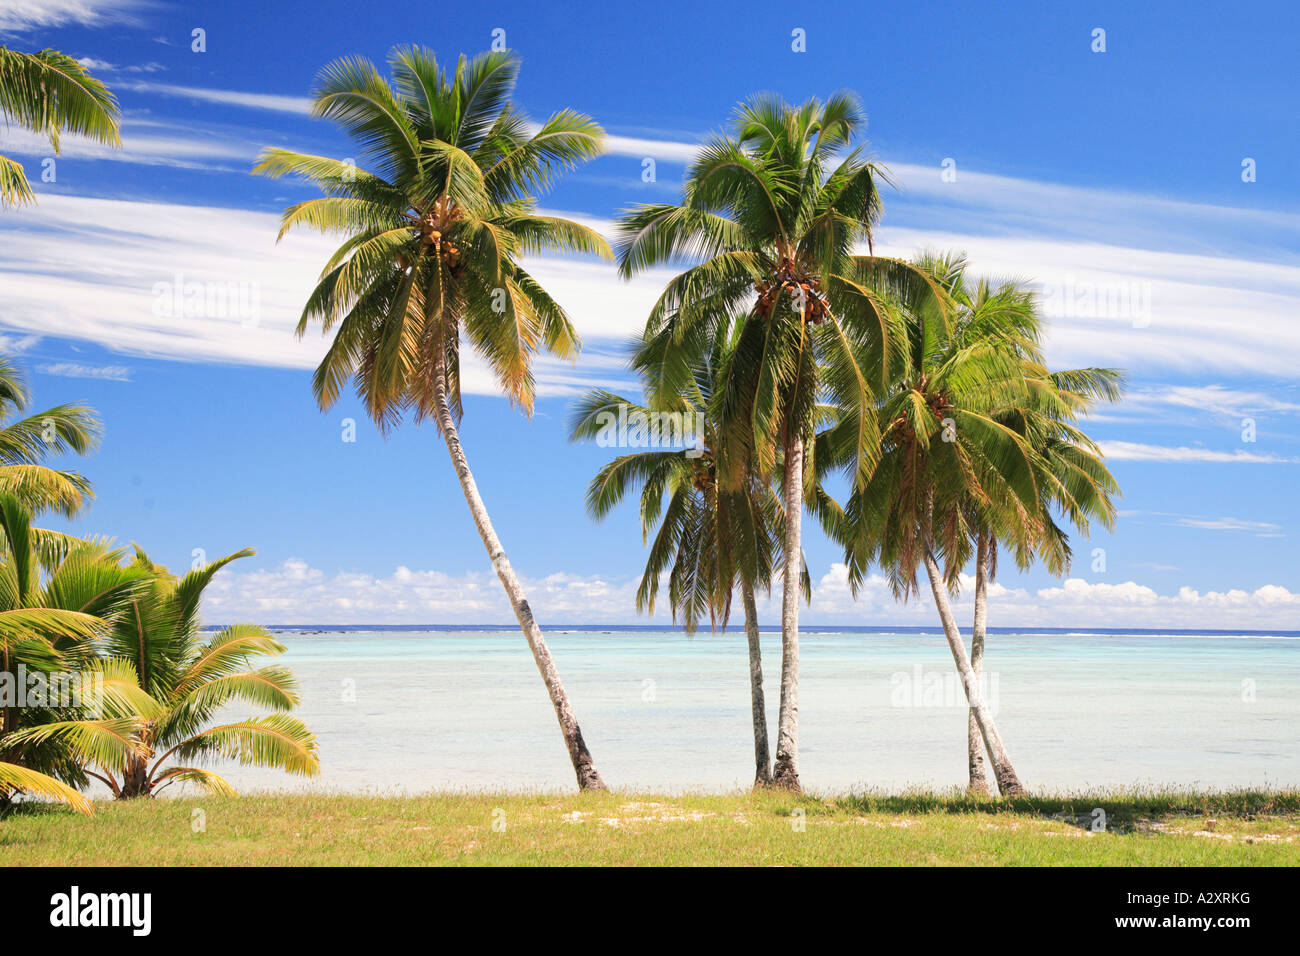 Palms, Grass and clouds. Raratonga Cook islands Polynesia Pacific Stock Photo